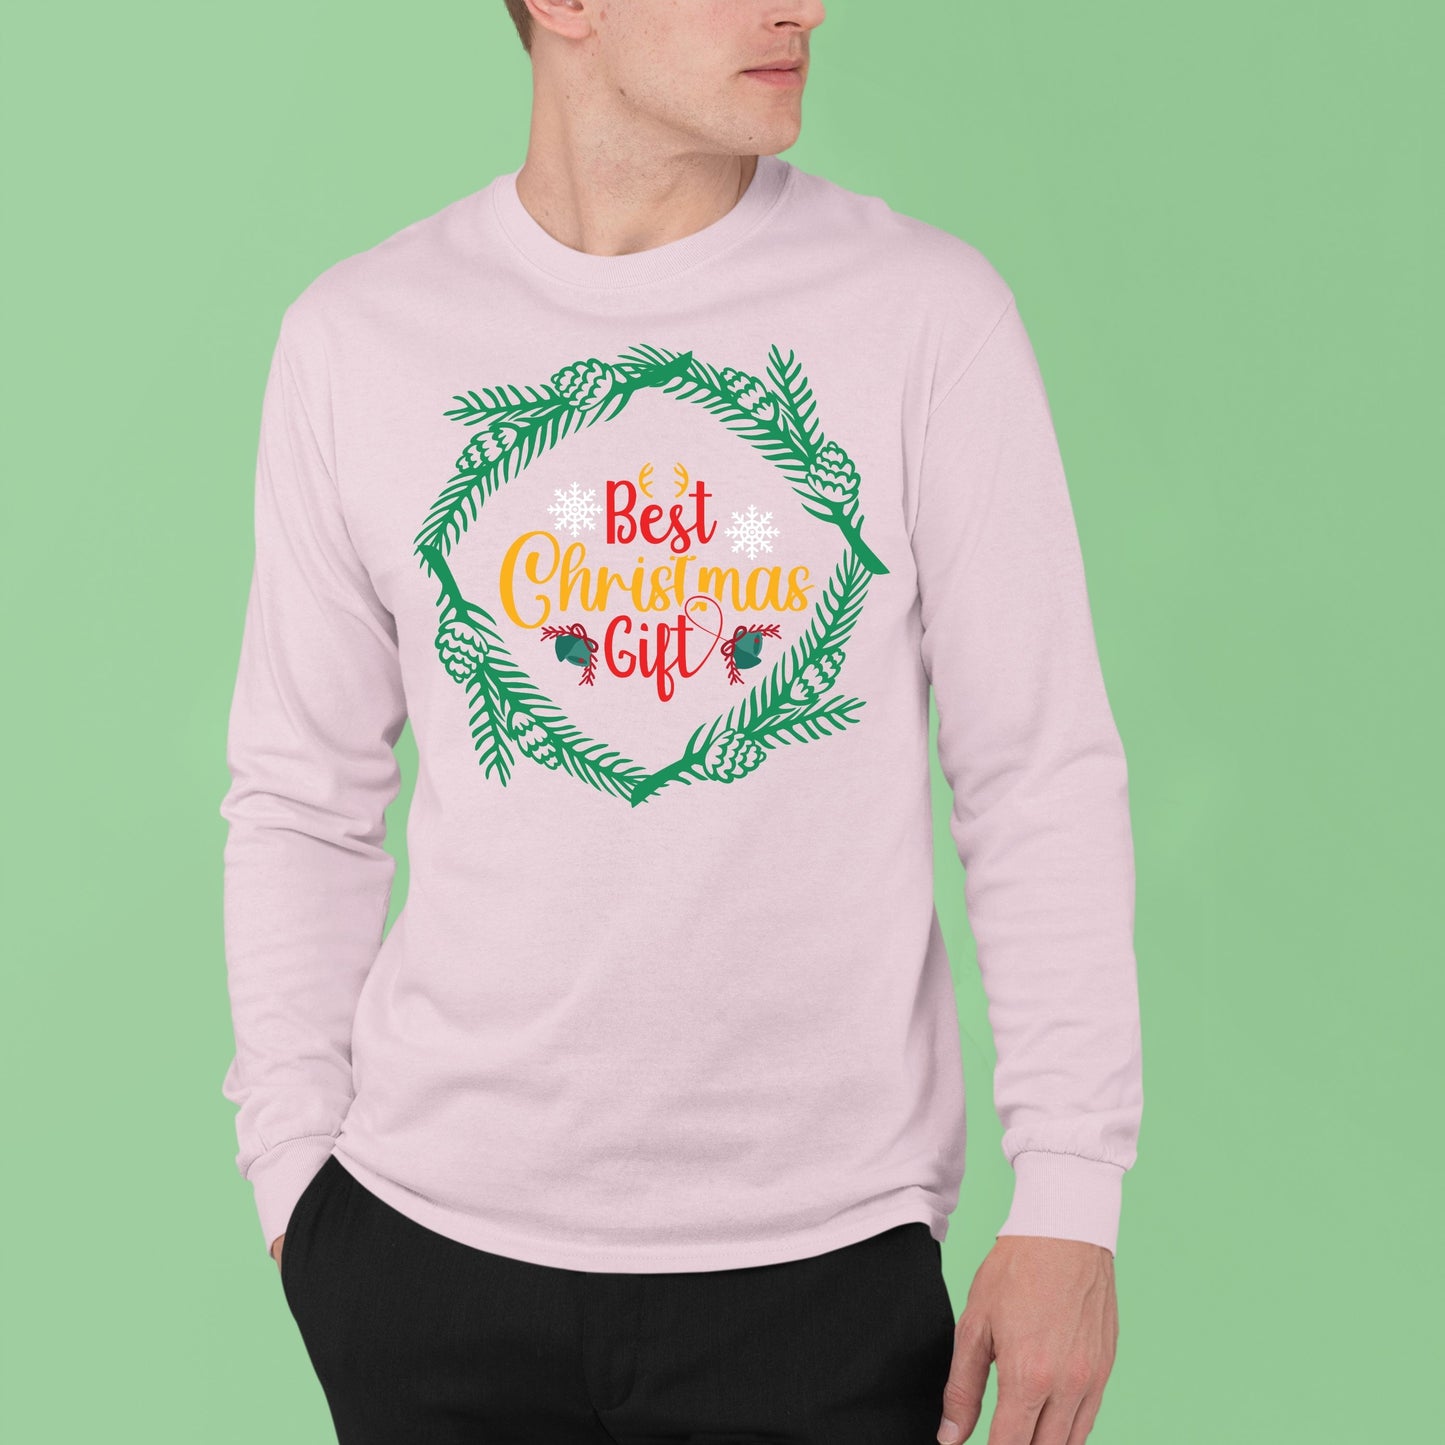 Best Christmas Gift, Christmas Long Sleeves, Christmas Crewneck For Men, Christmas Sweatshirt, Christmas Sweater, Christmas Present